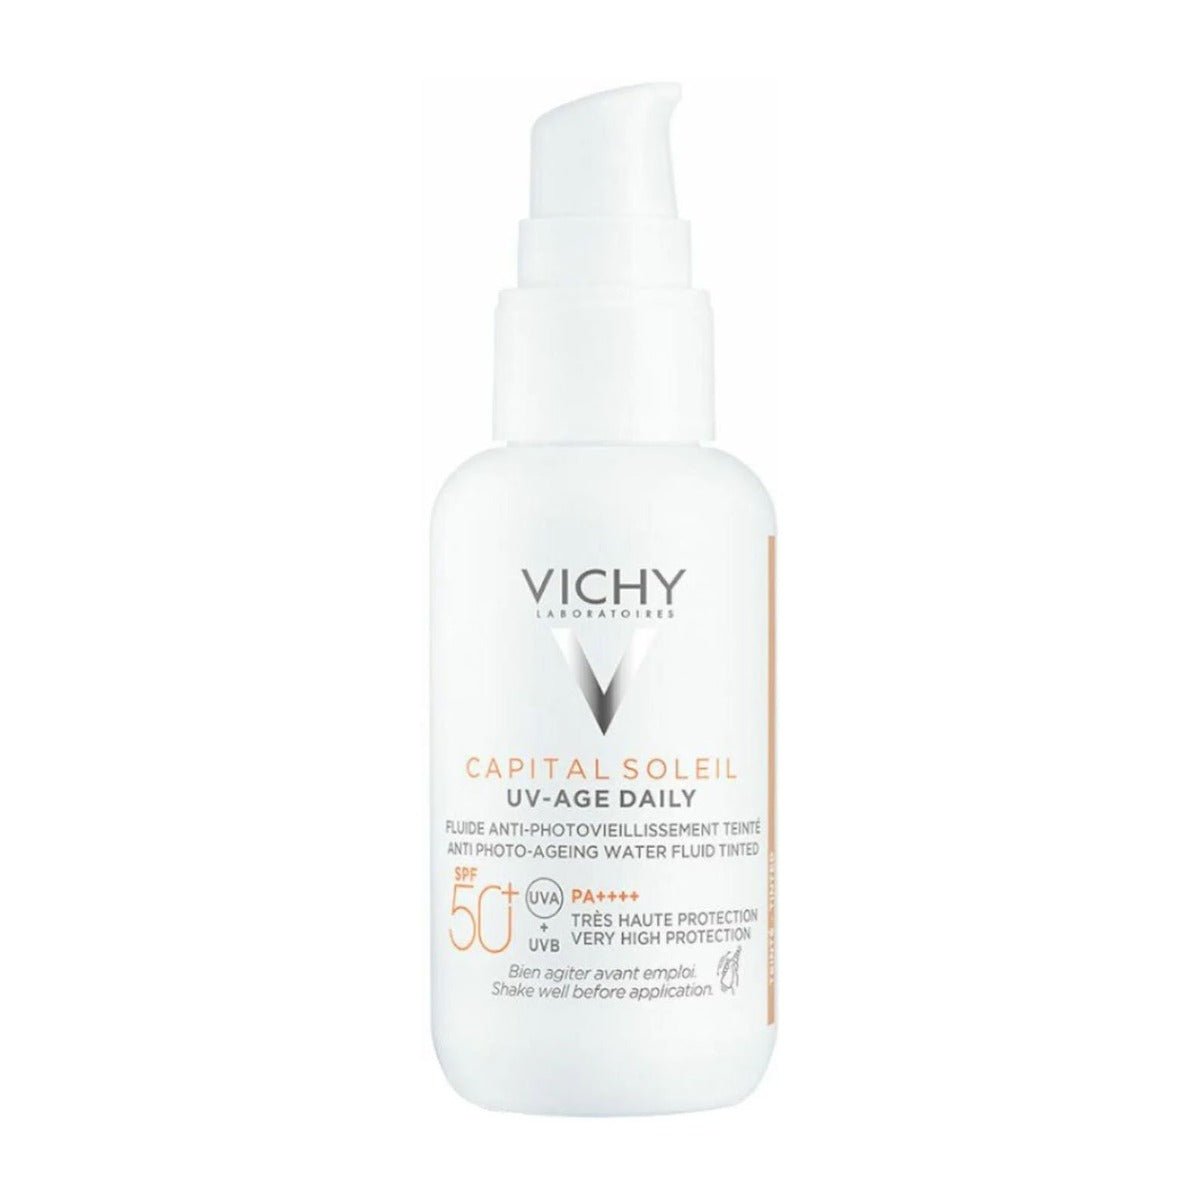 Vichy Capital Soleil Uv-Age Daily Tinted Fluid SPF 50+ - 40ml - Bloom Pharmacy